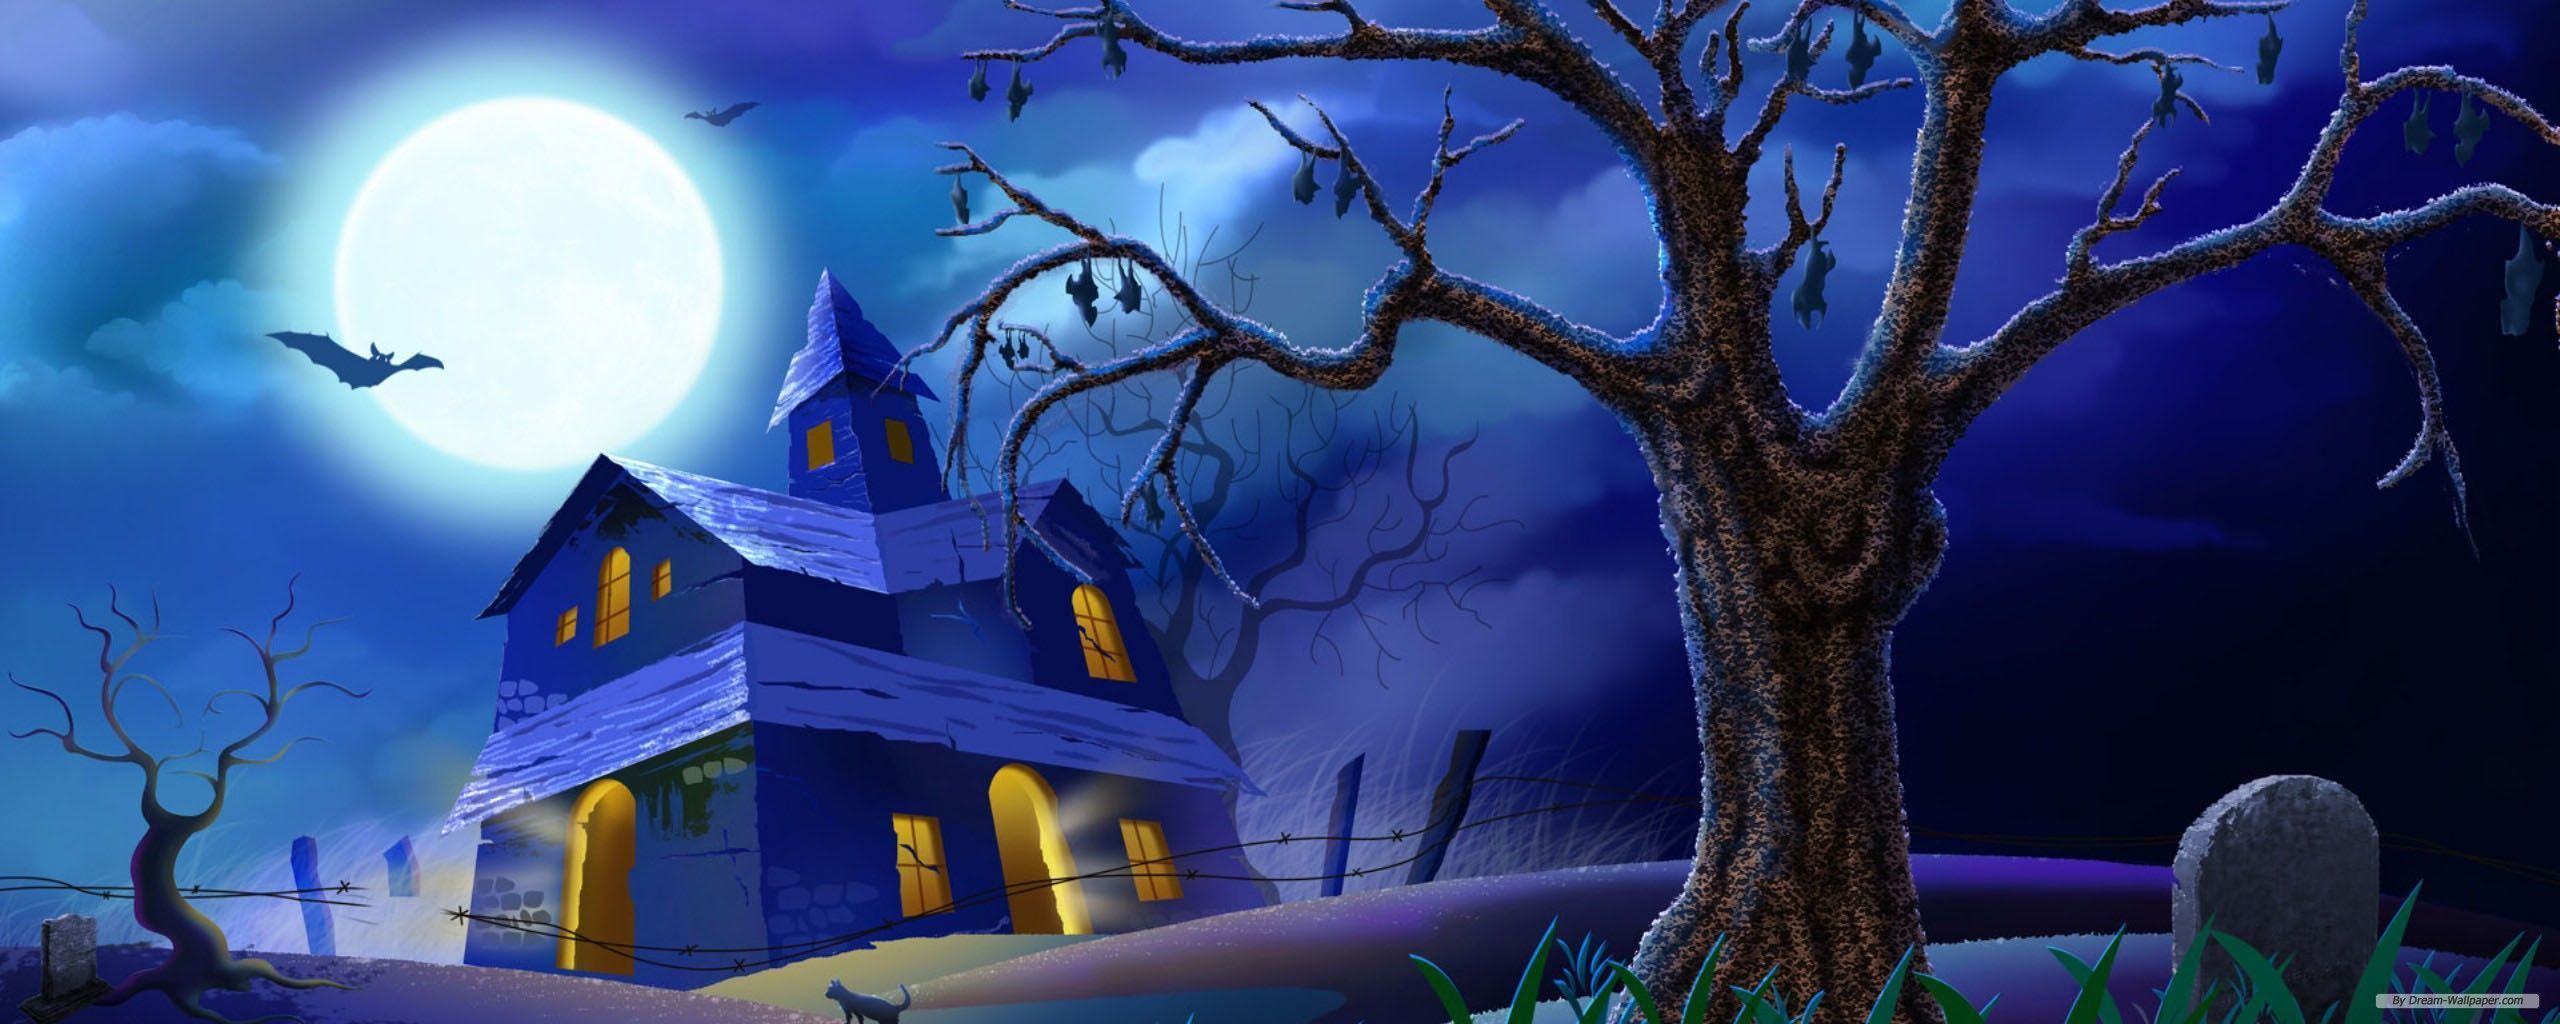 Free Wallpaper - Free Holiday wallpaper - Halloween Episode 6 ...